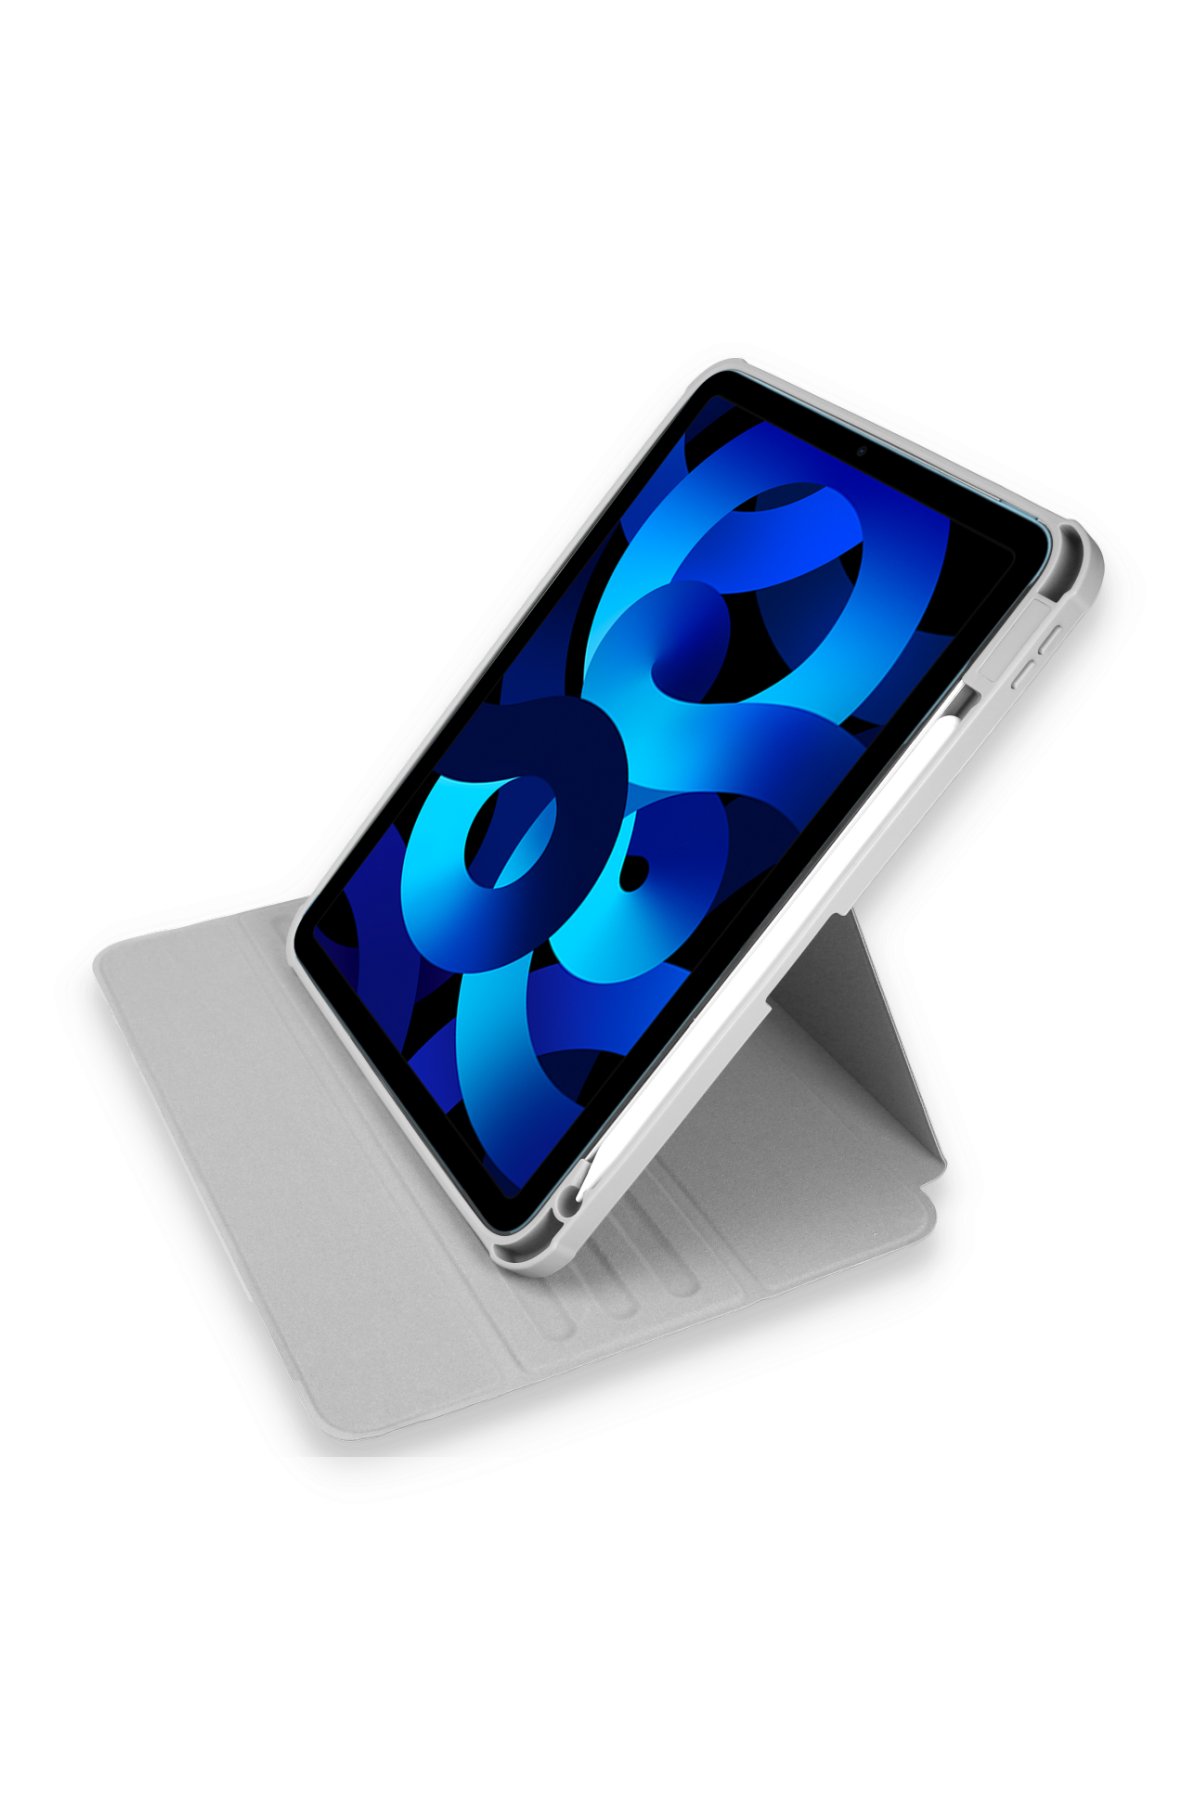 Newface iPad Air 4 10.9 Tablet Cam Ekran Koruyucu